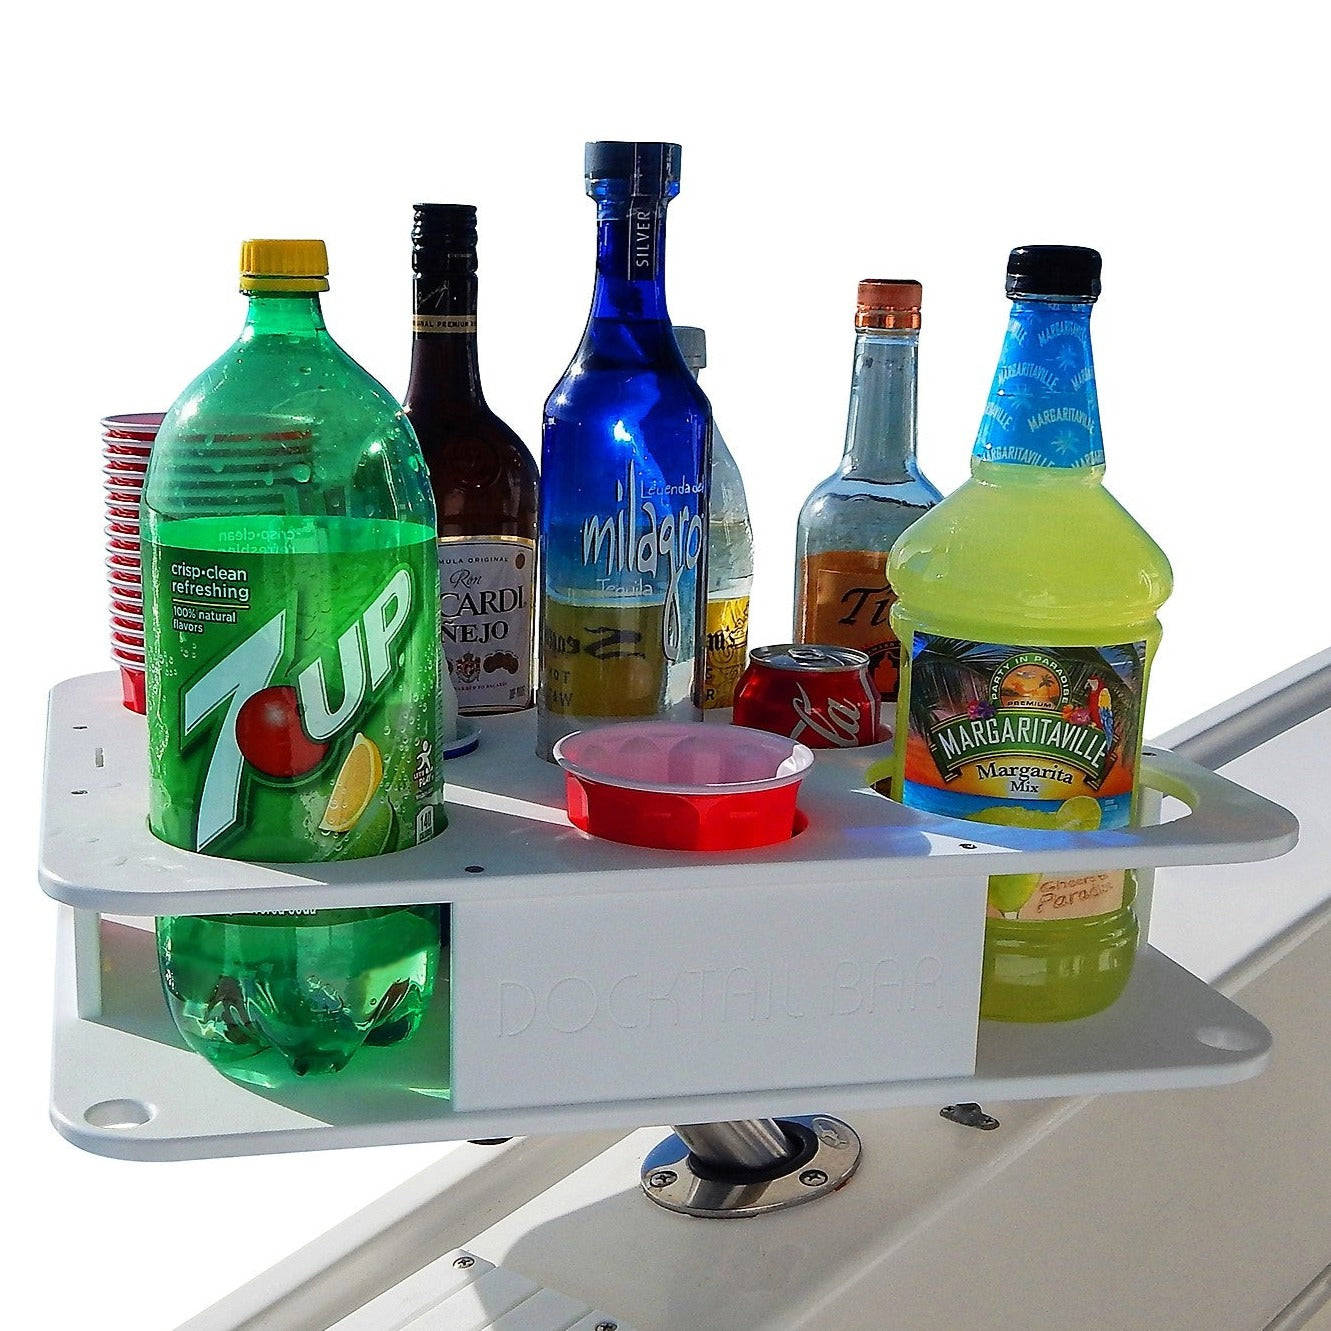 Docktail Bar Innovative Boat Tables White Vinyl Window Transfer Stic